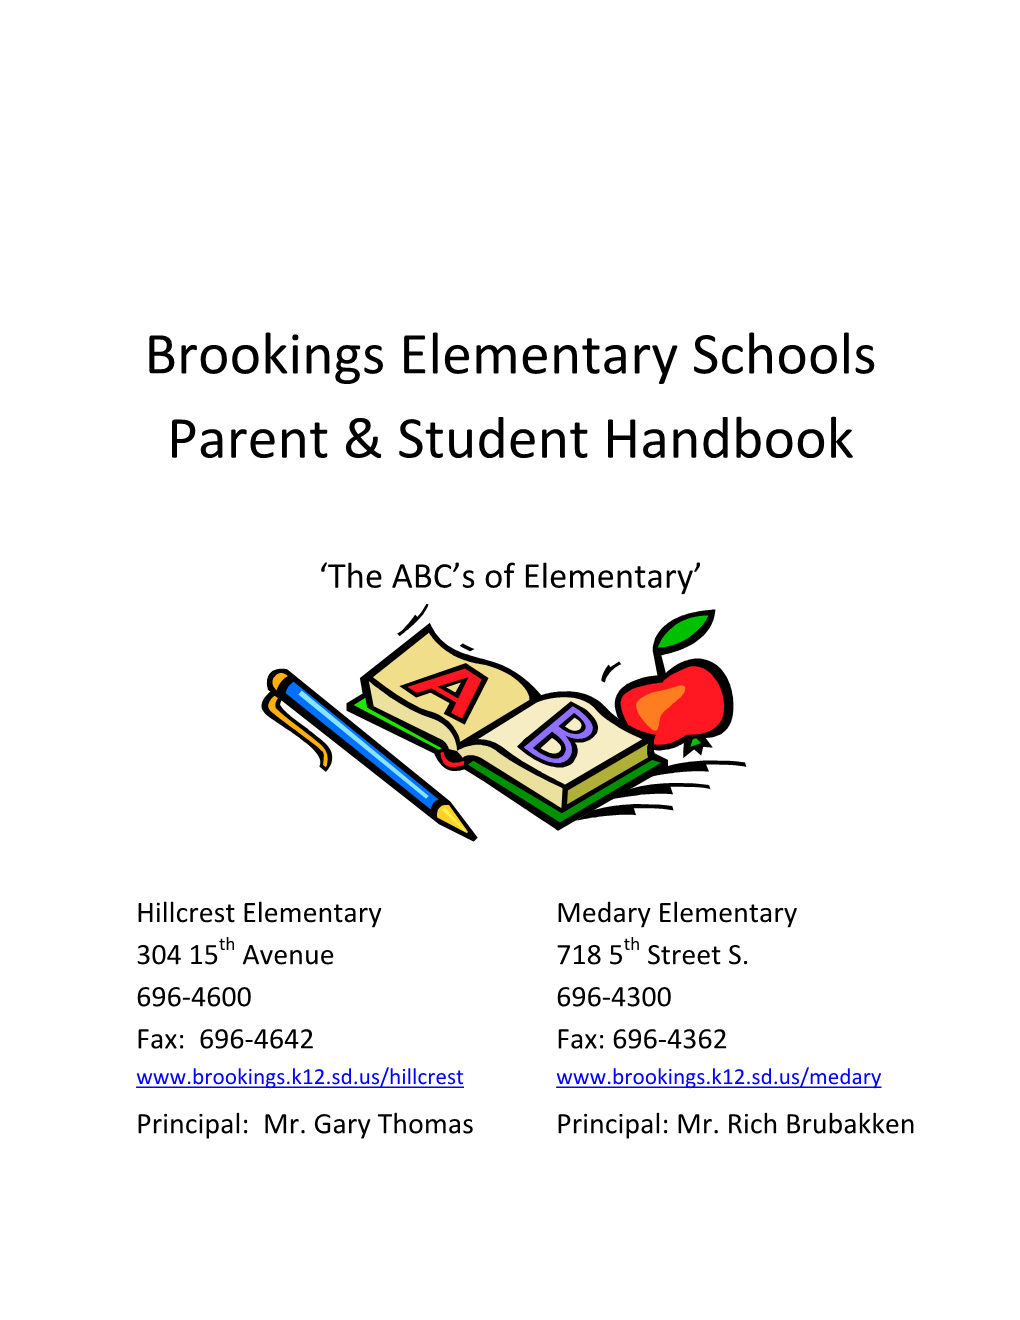 Brookings Elementary Schools Parent & Student Handbook